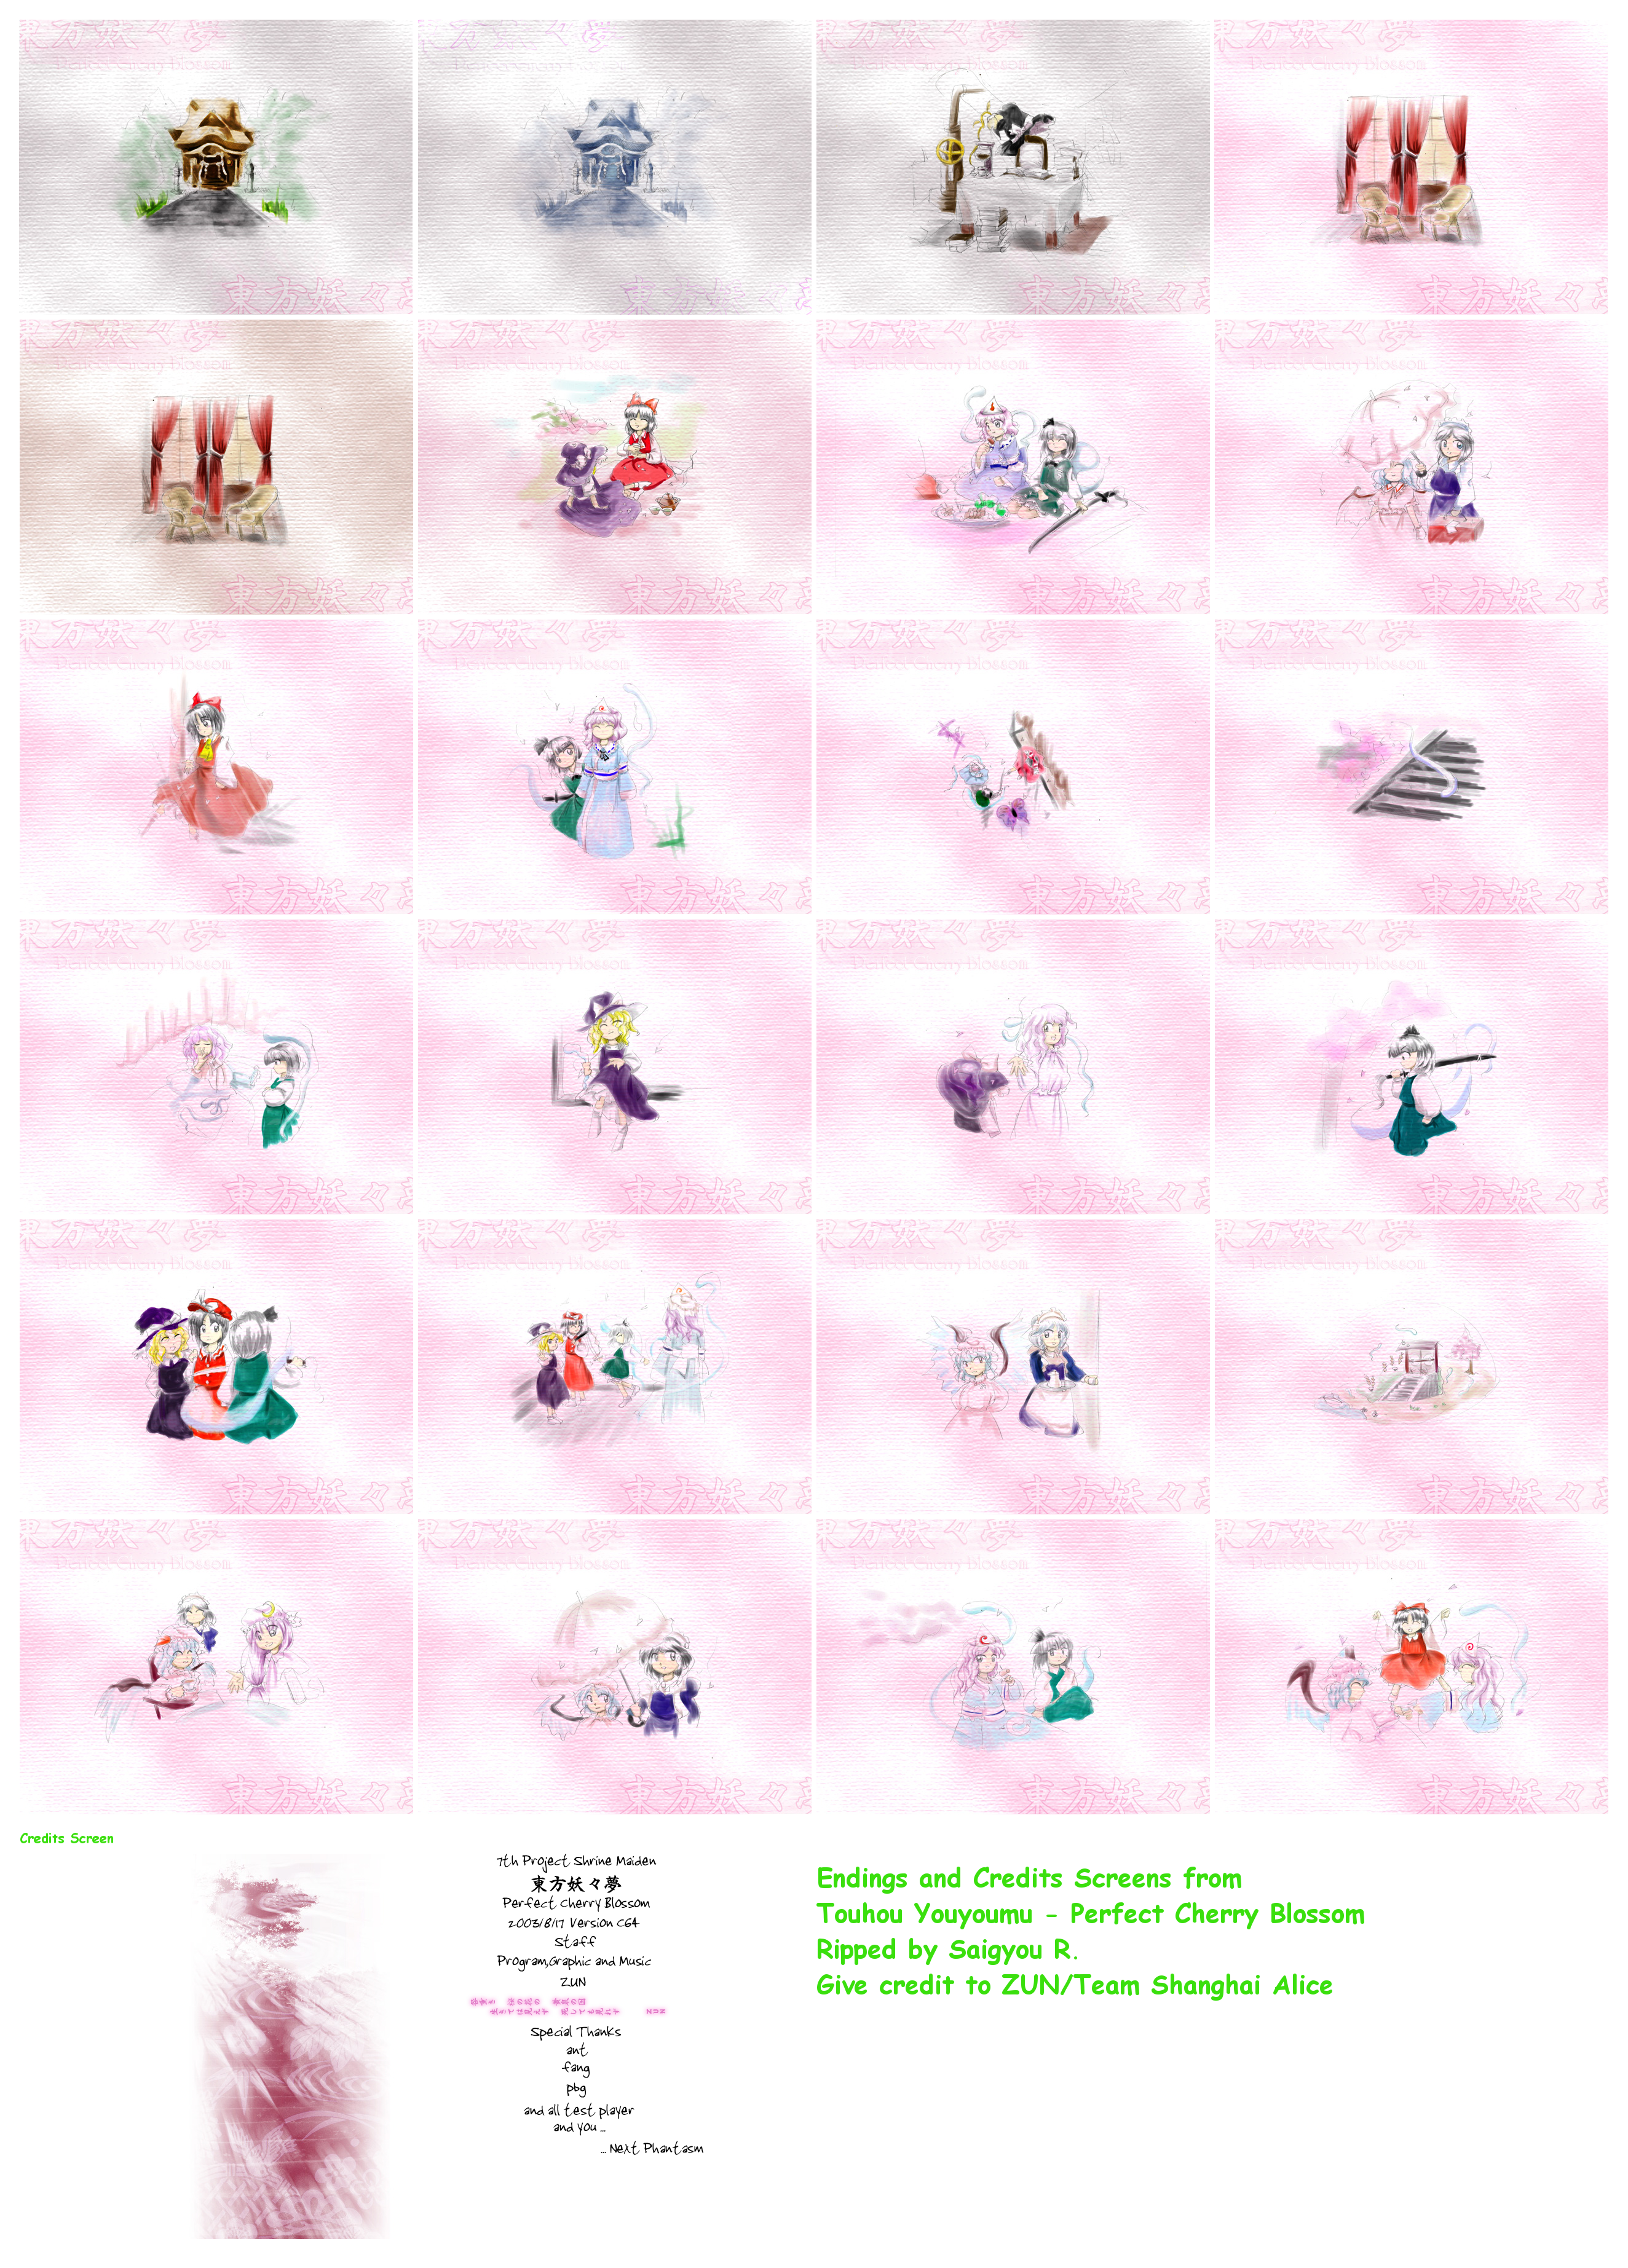 Touhou Youyoumu (Perfect Cherry Blossom) - Ending & Staff Screens